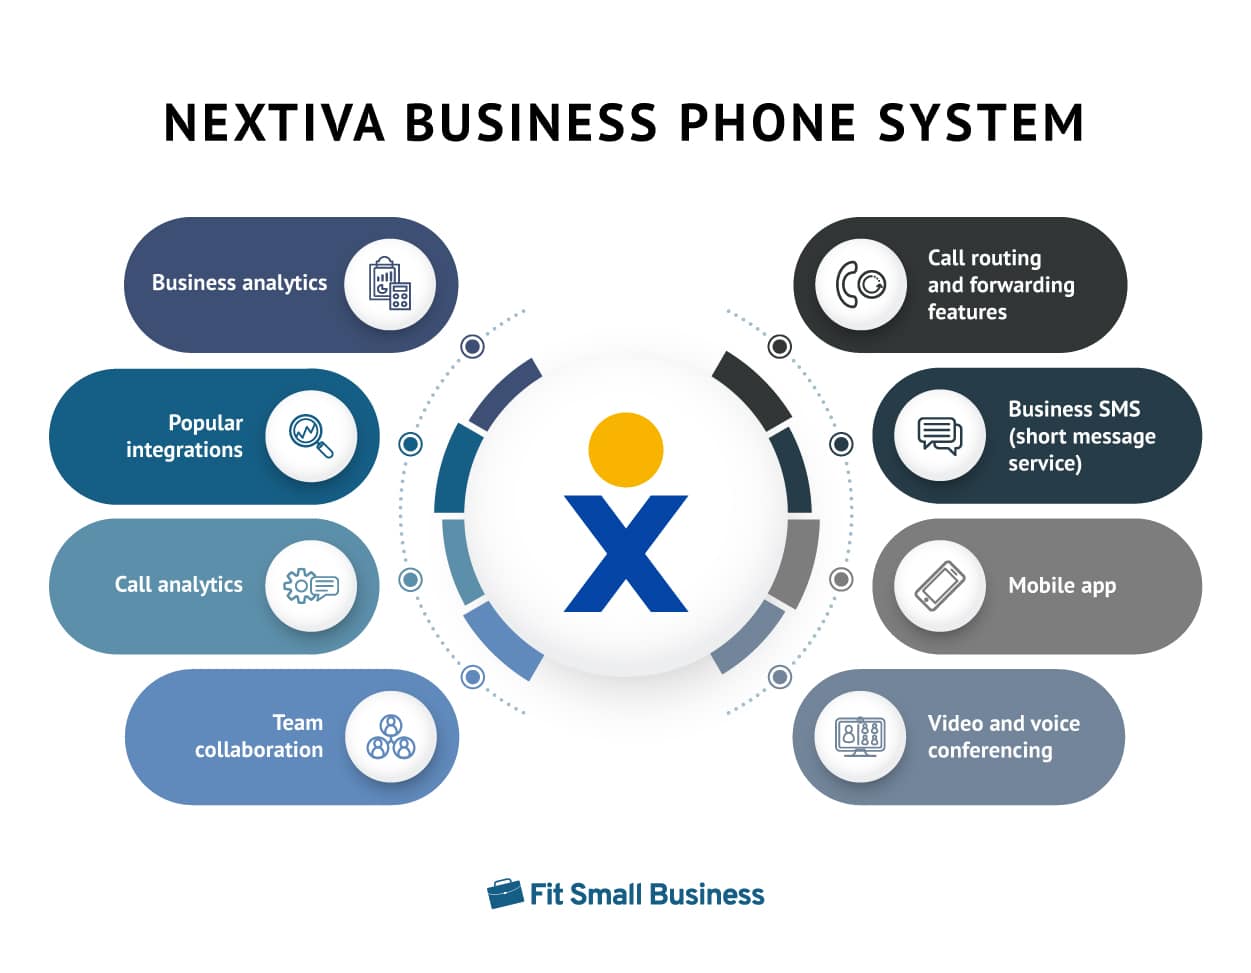 Image showing Nextiva business phone system.